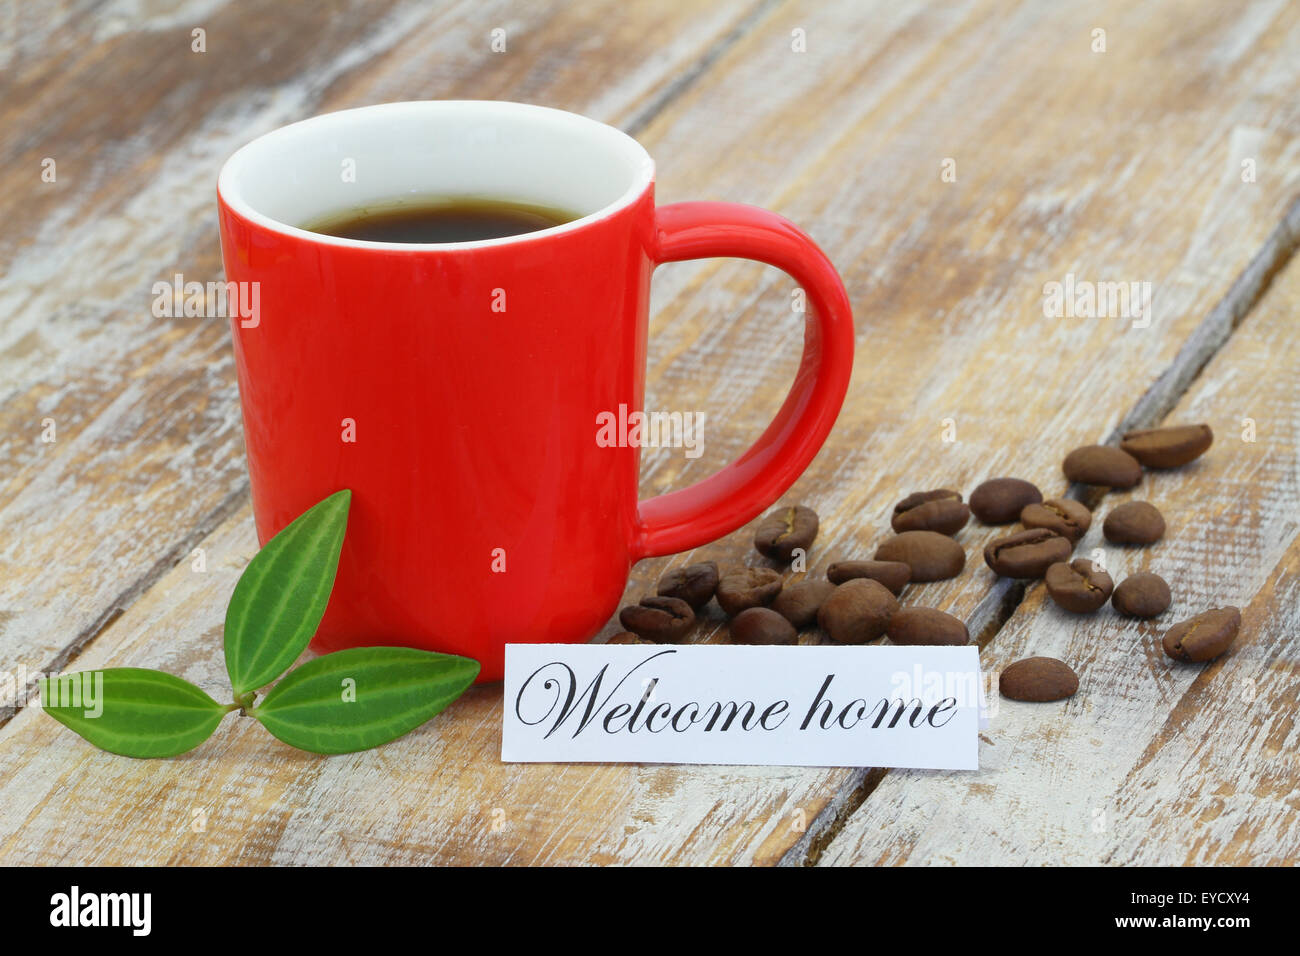 https://c8.alamy.com/comp/EYCXY4/welcome-home-card-with-mug-of-coffee-EYCXY4.jpg